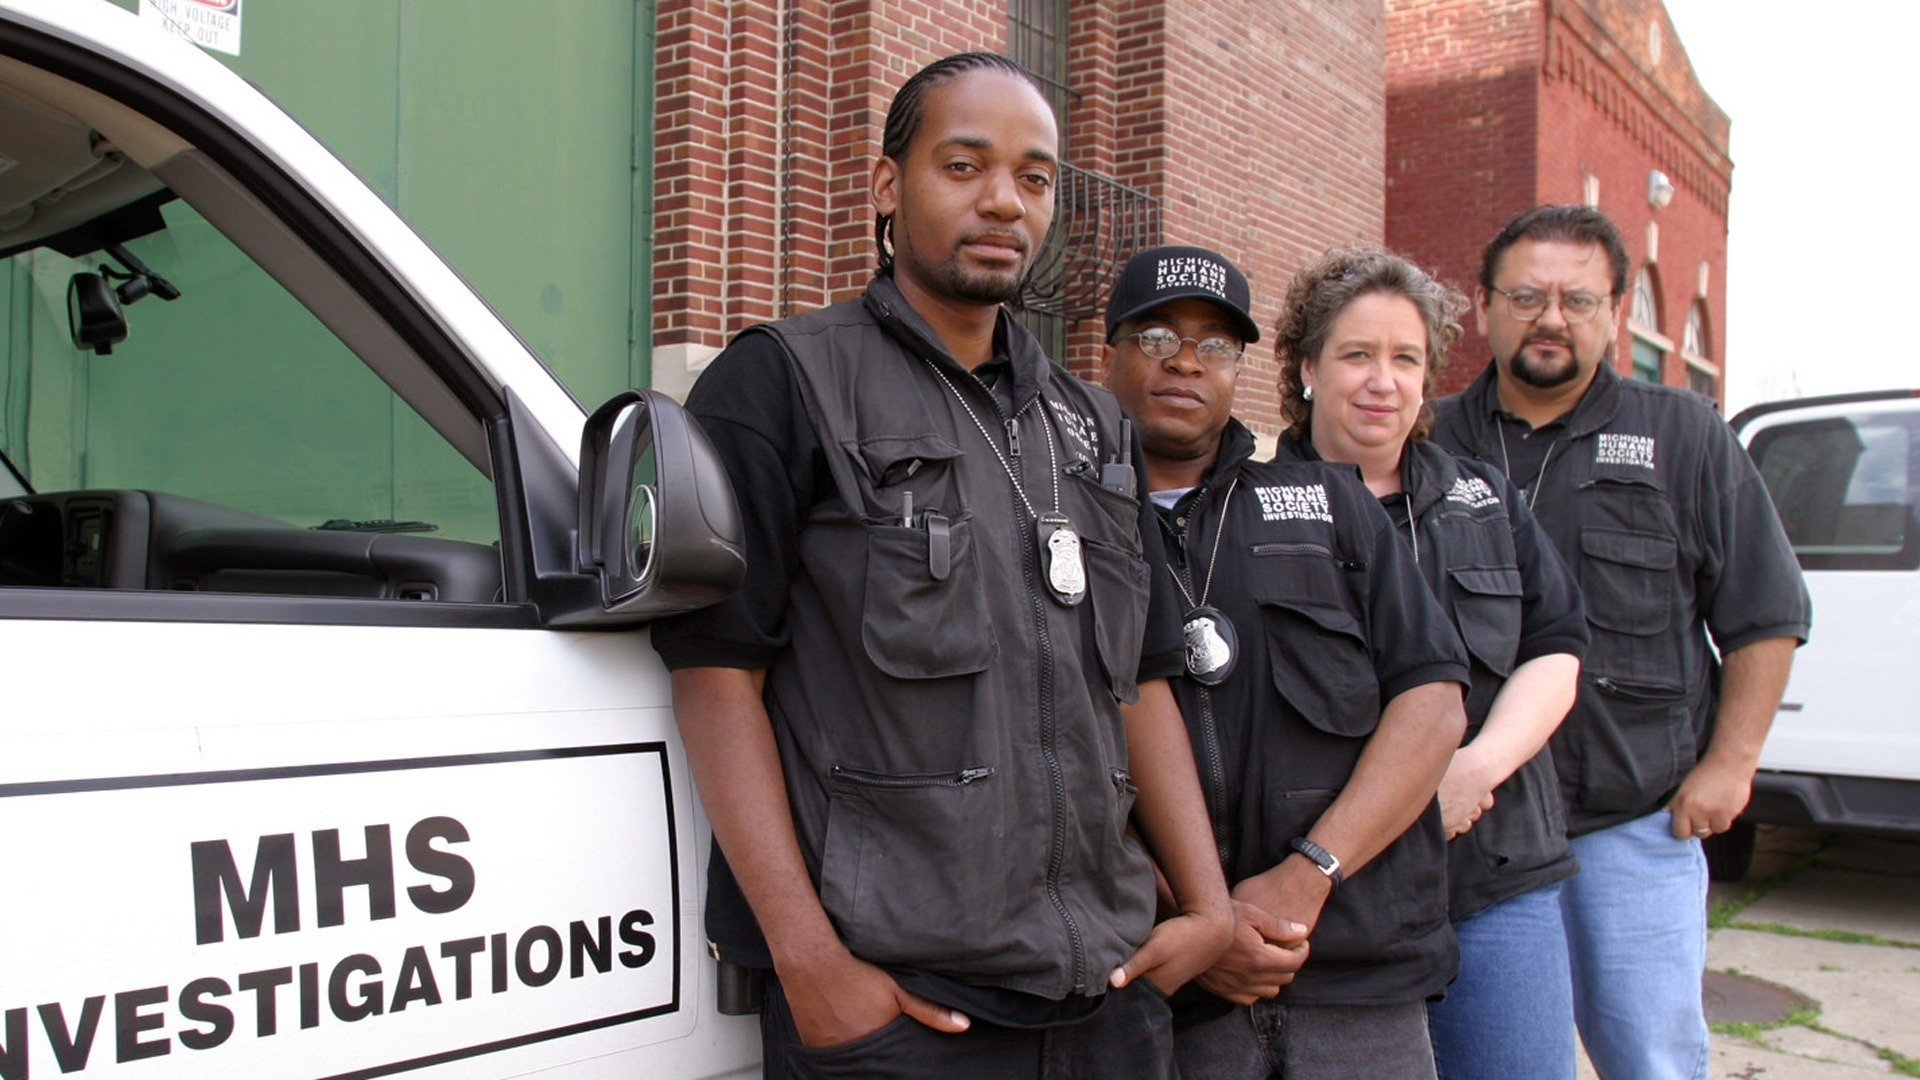 Animal Cops: Detroit - Rotten Tomatoes